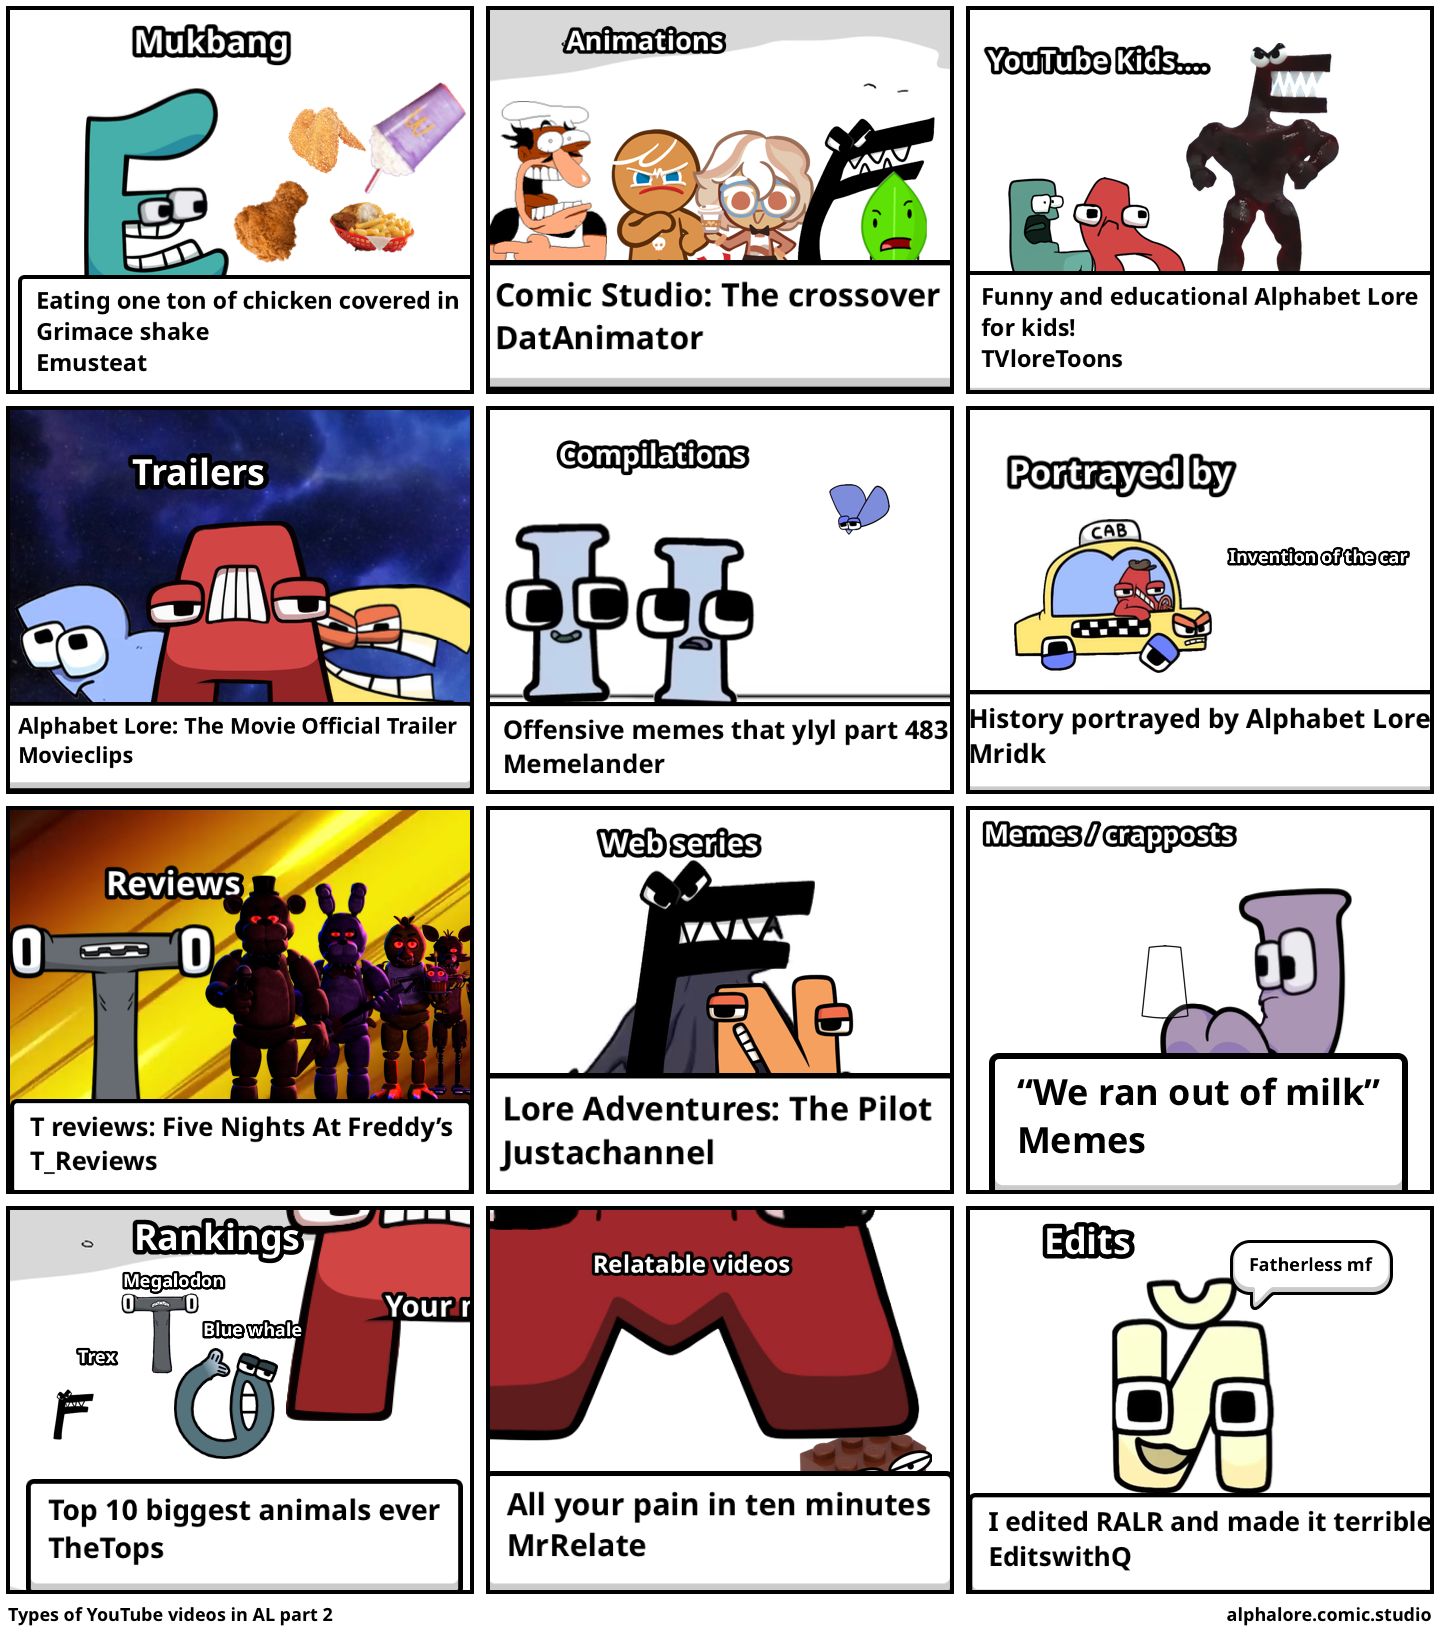 Types of movie scenes portrayed by Alphabet Lore - Comic Studio